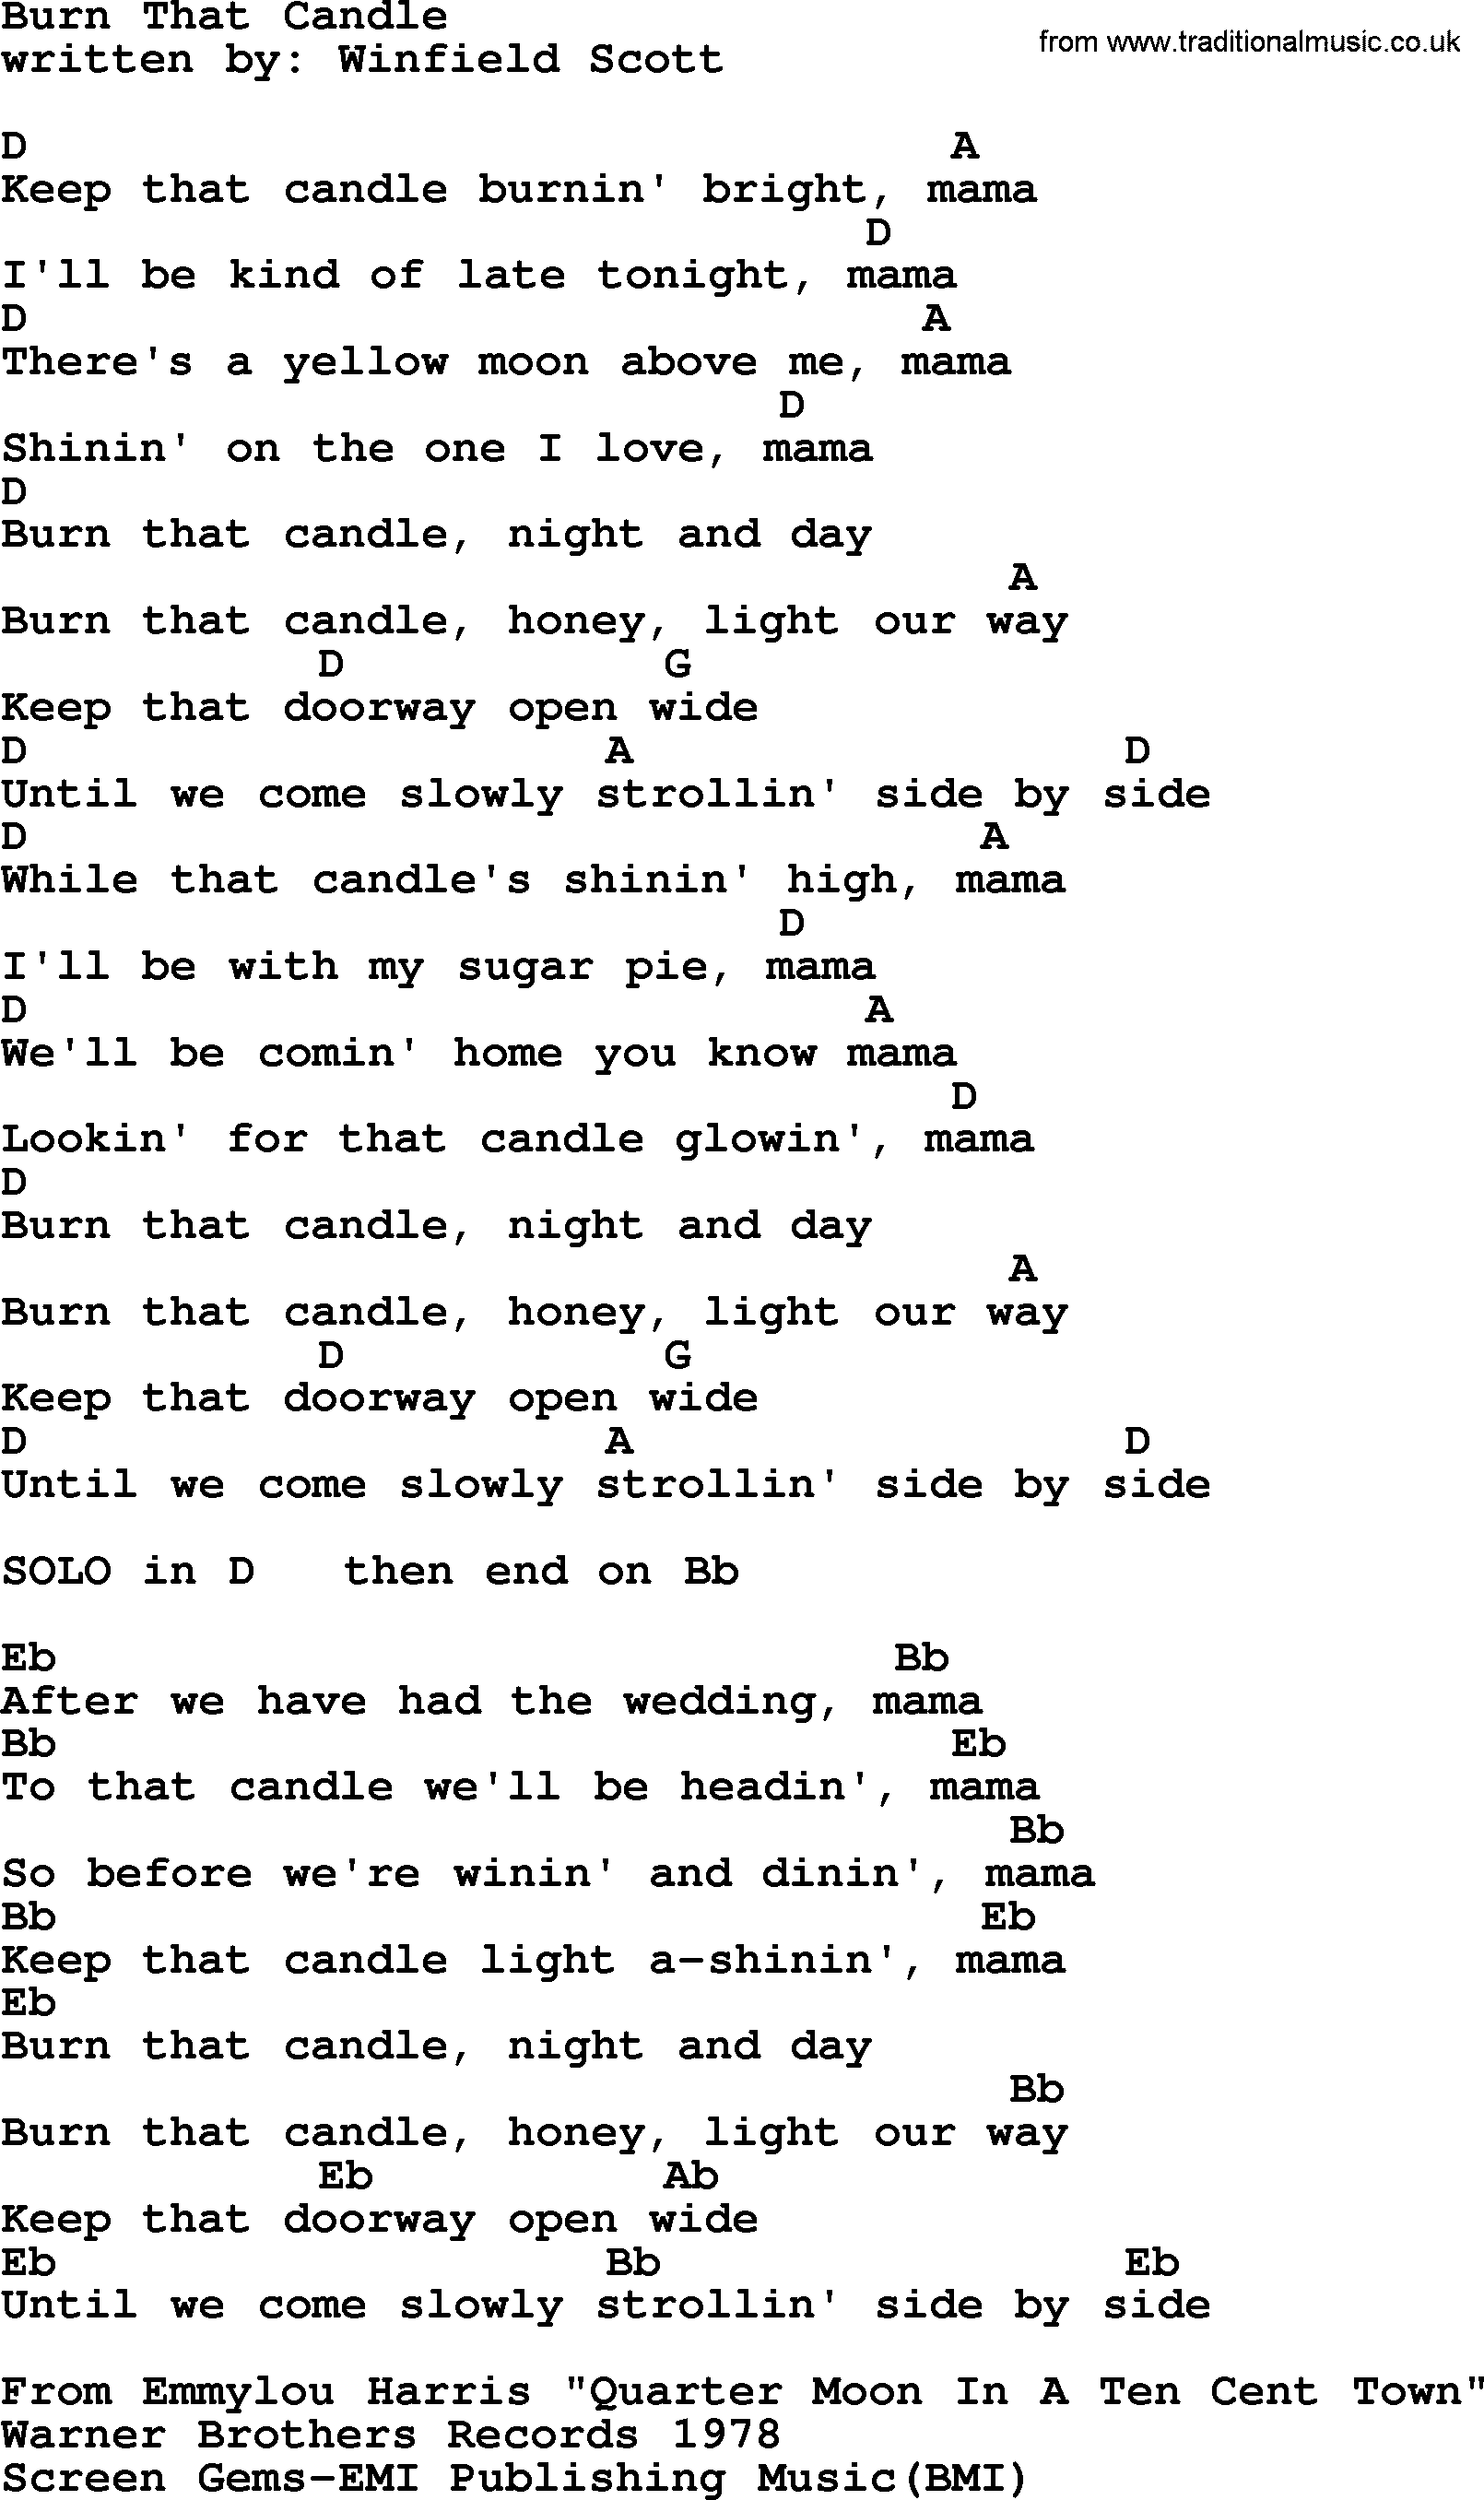 Emmylou Harris song: Burn That Candle lyrics and chords